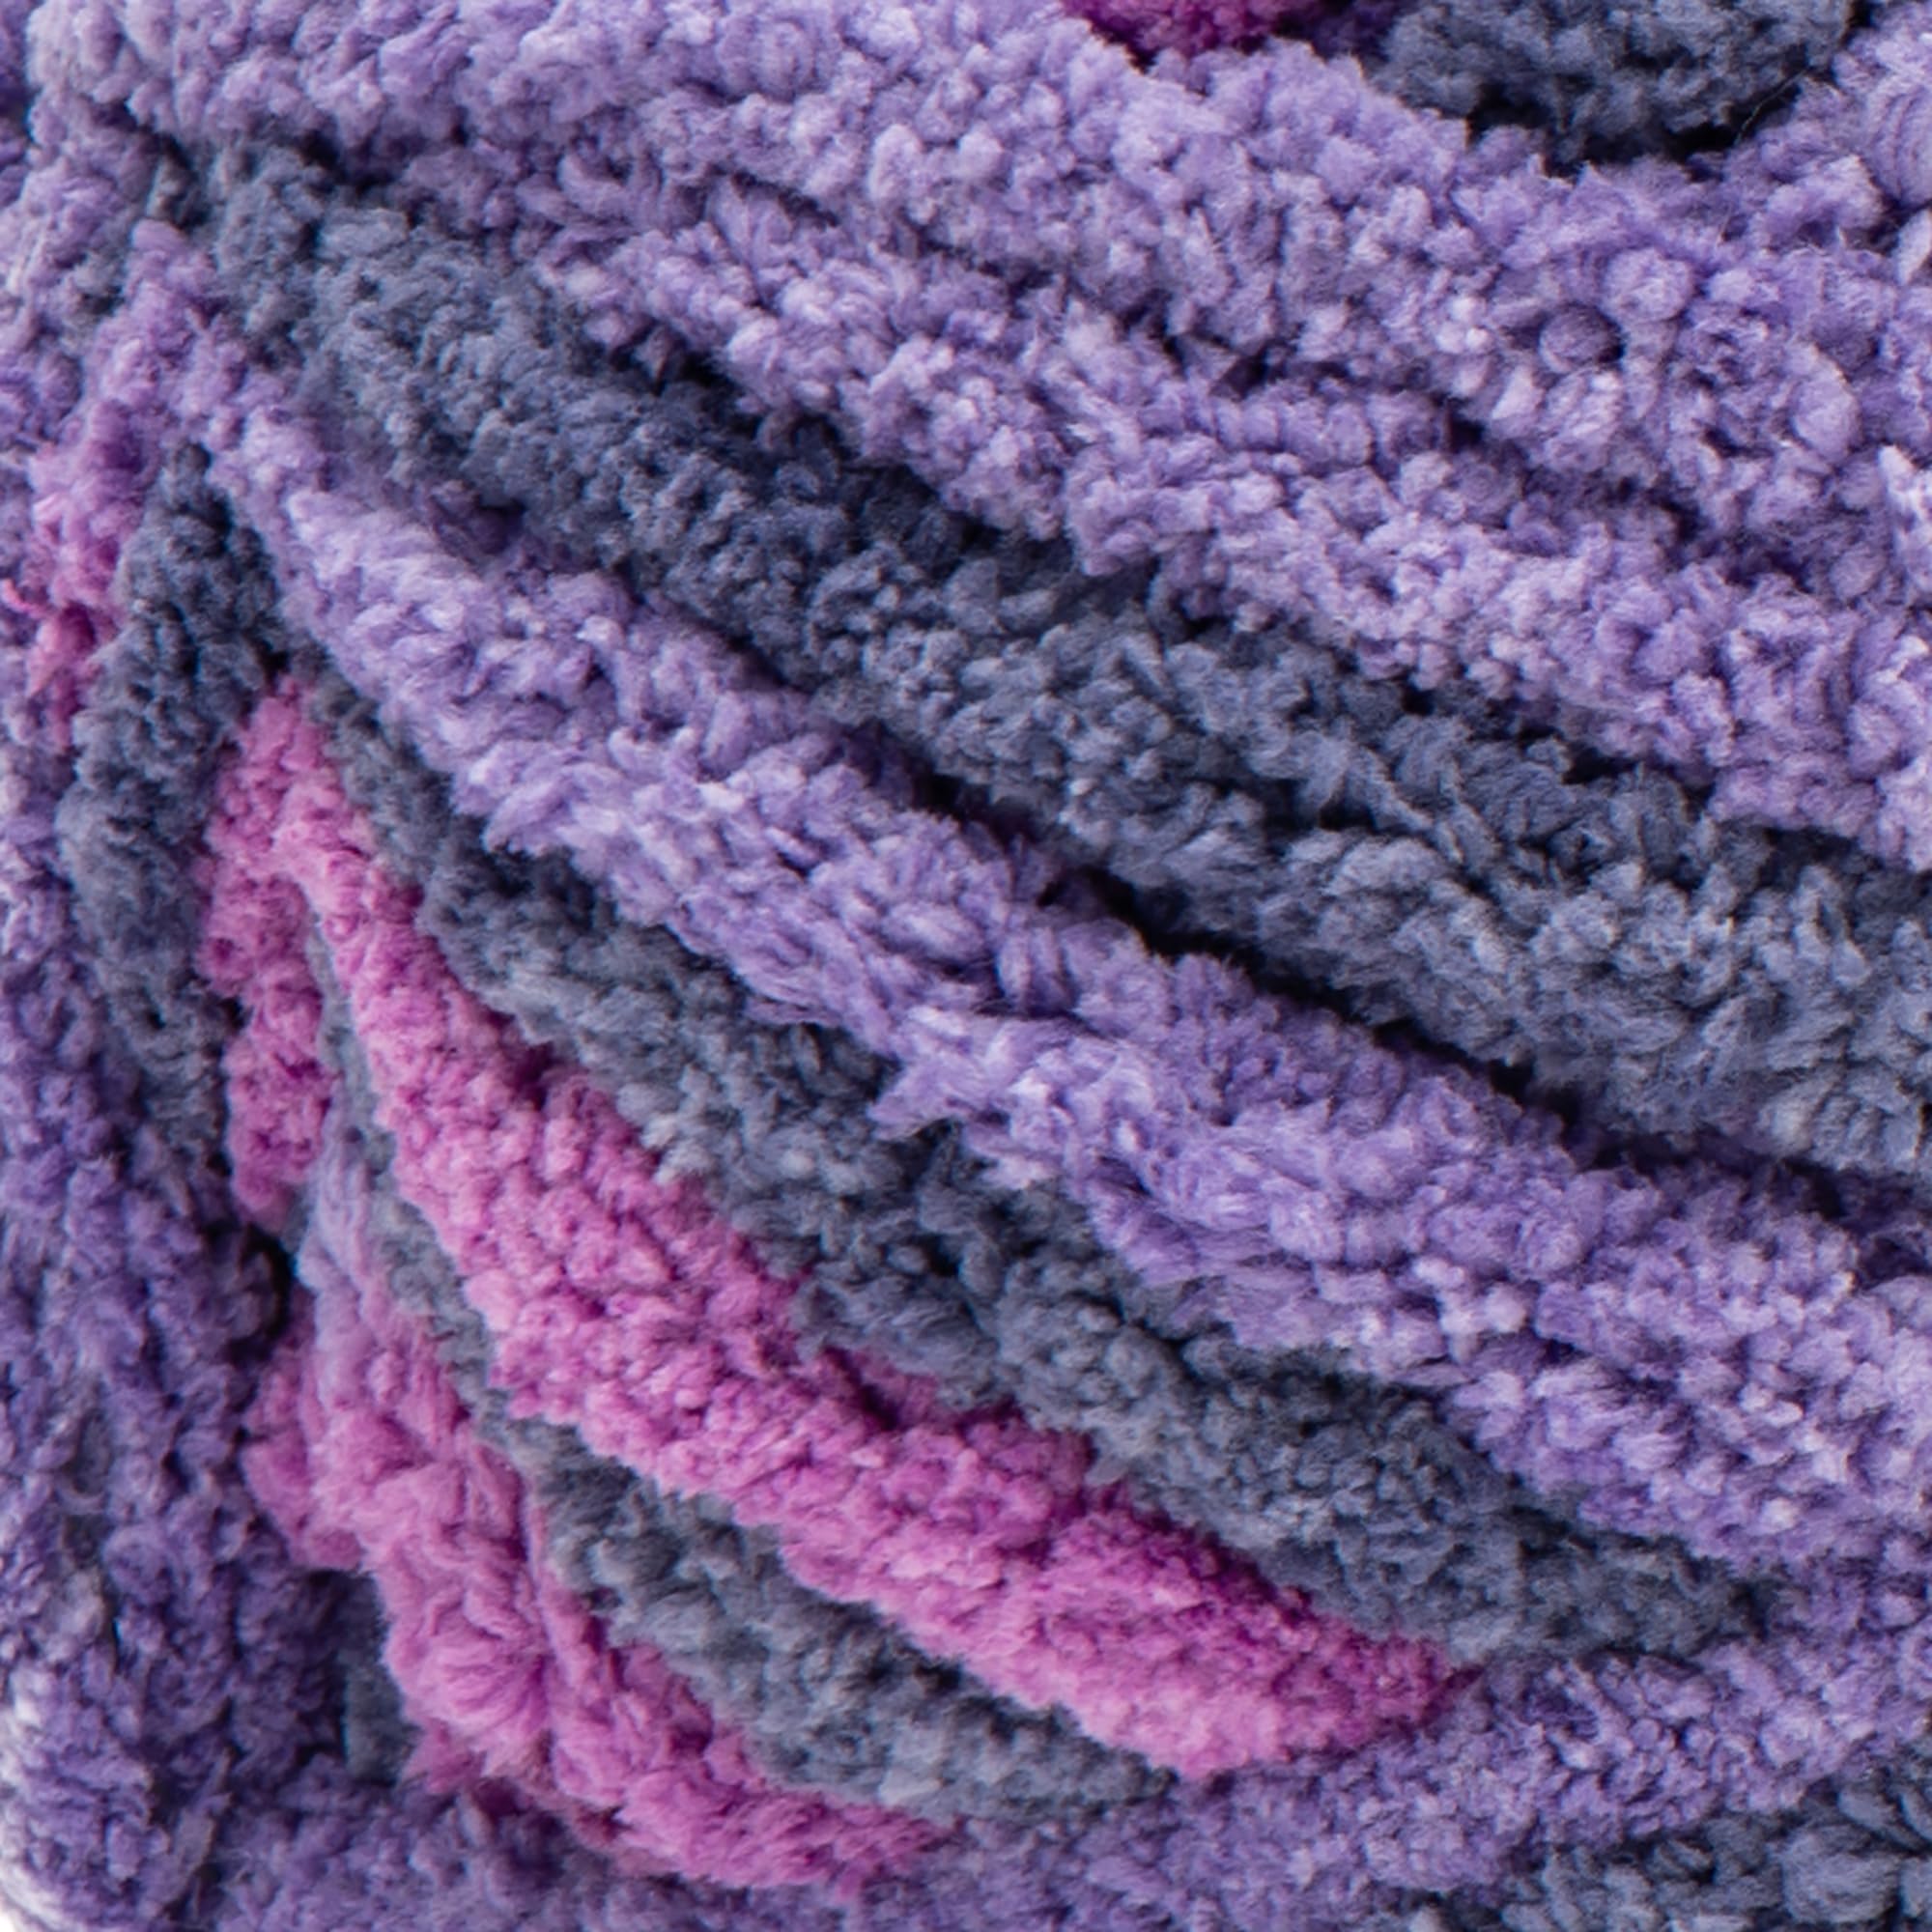 Bernat Blanket Extra Purple Sunset Yarn - 2 Pack of 10.5oz/300g - Polyester - #7 Jumbo - 97 Yards - Knitting, Crocheting, Crafts & Amigurumi, Chunky Chenille Yarn